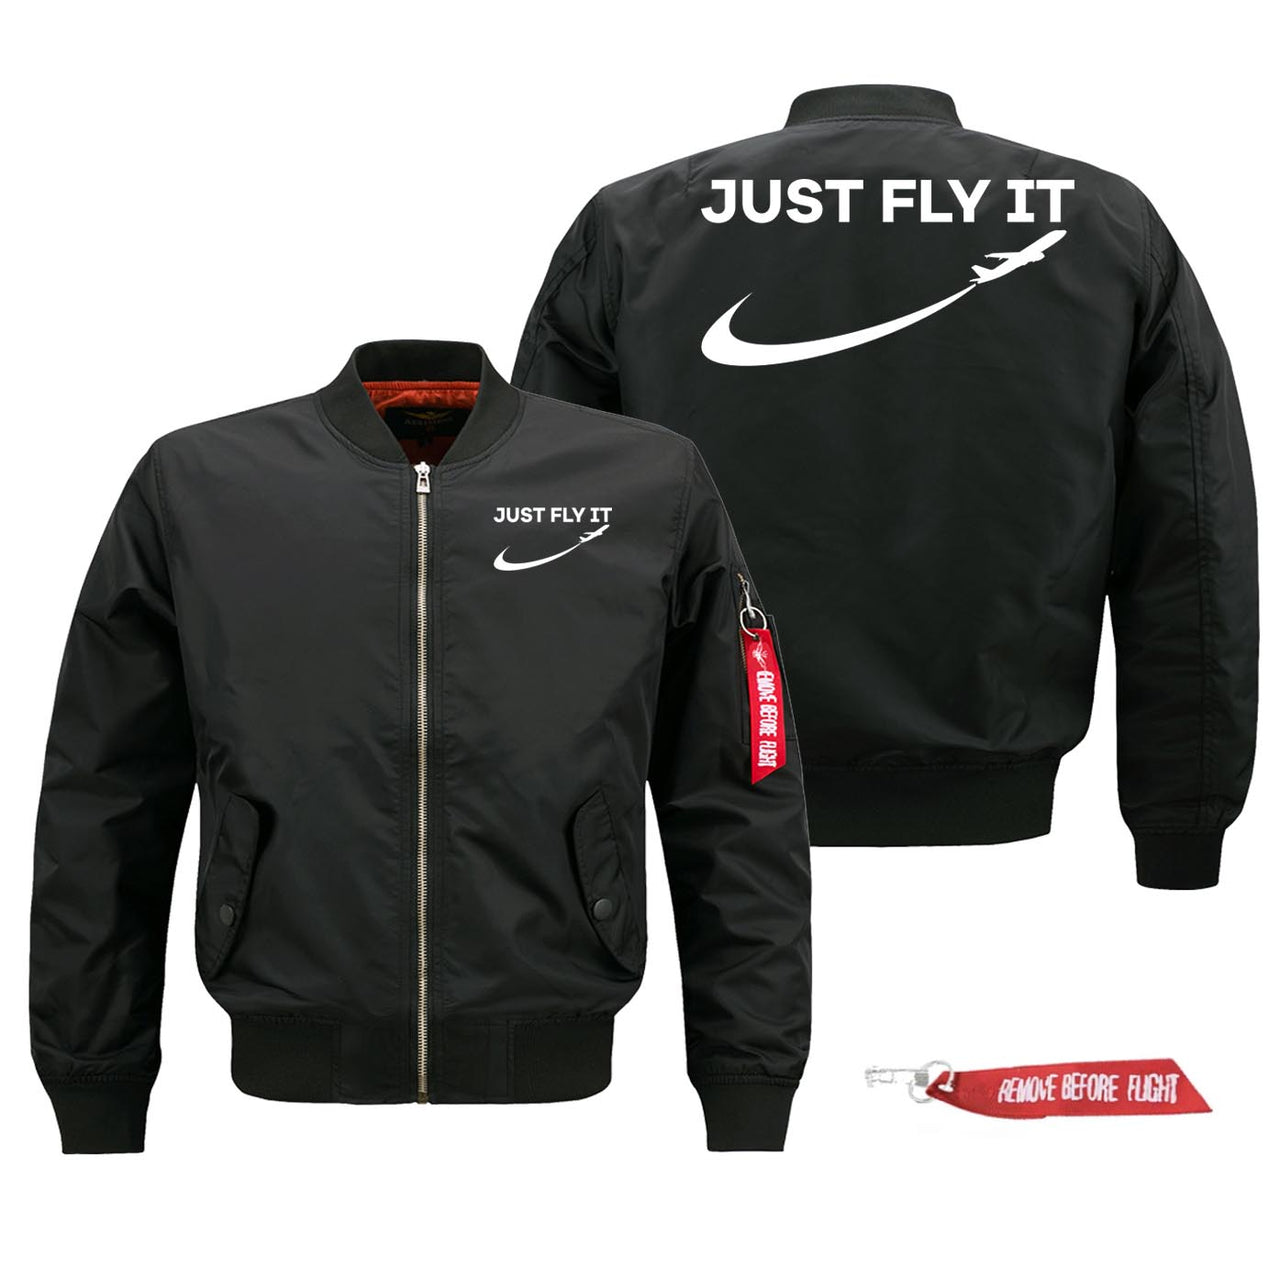 Just Fly It 2 Designed Pilot Jackets (Customizable)